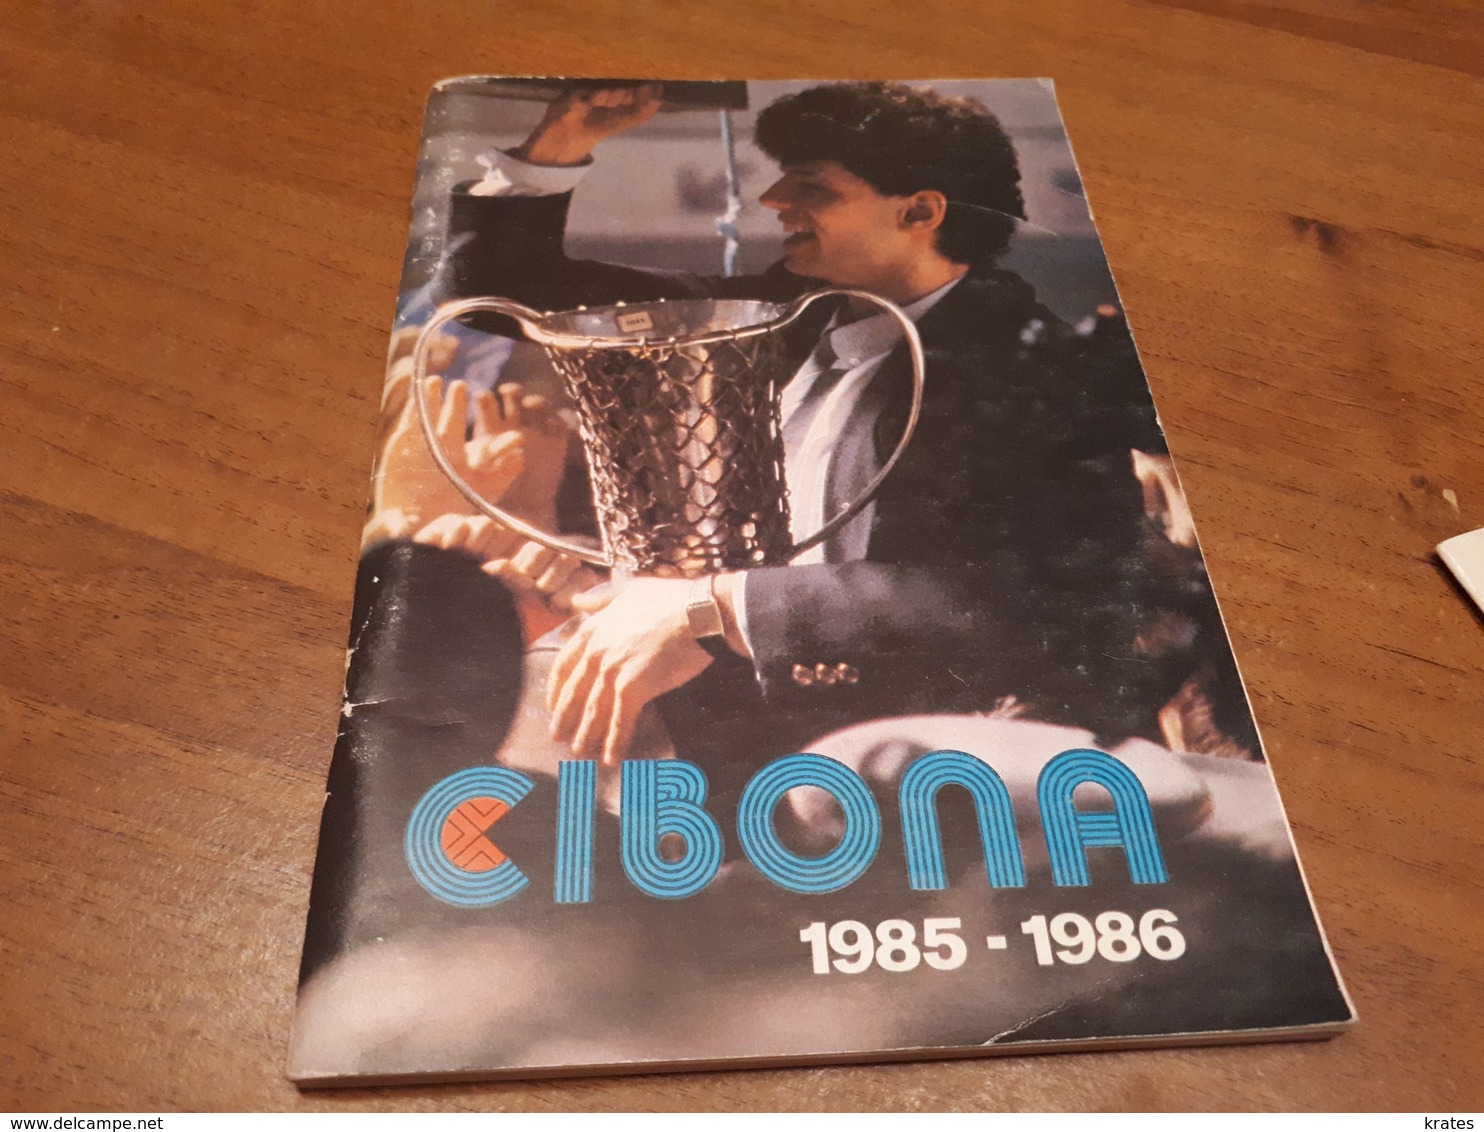 Old Basketball Brochure - KK Cibona Zagreb 1985-1986, Dražen Petrović, 80 Pages - Slav Languages